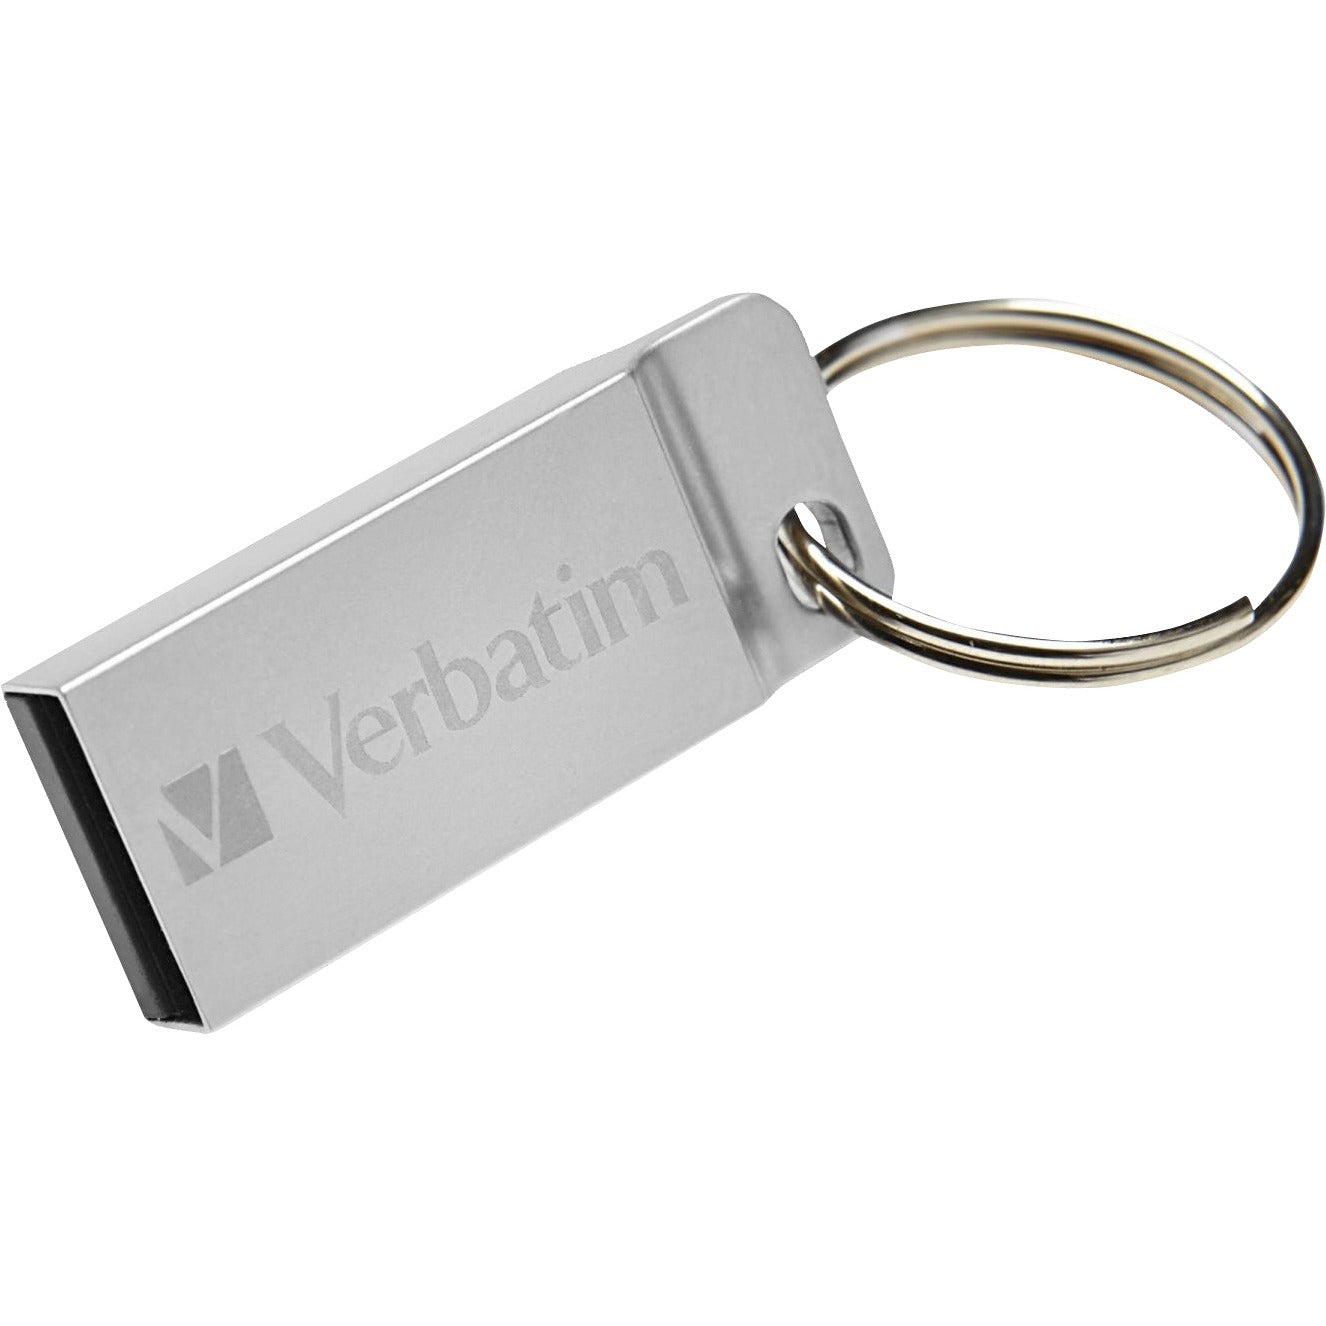 verbatim-16gb-metal-executive-usb-flash-drive-silver-16-gbusb-20-silver_ver98748 - 2